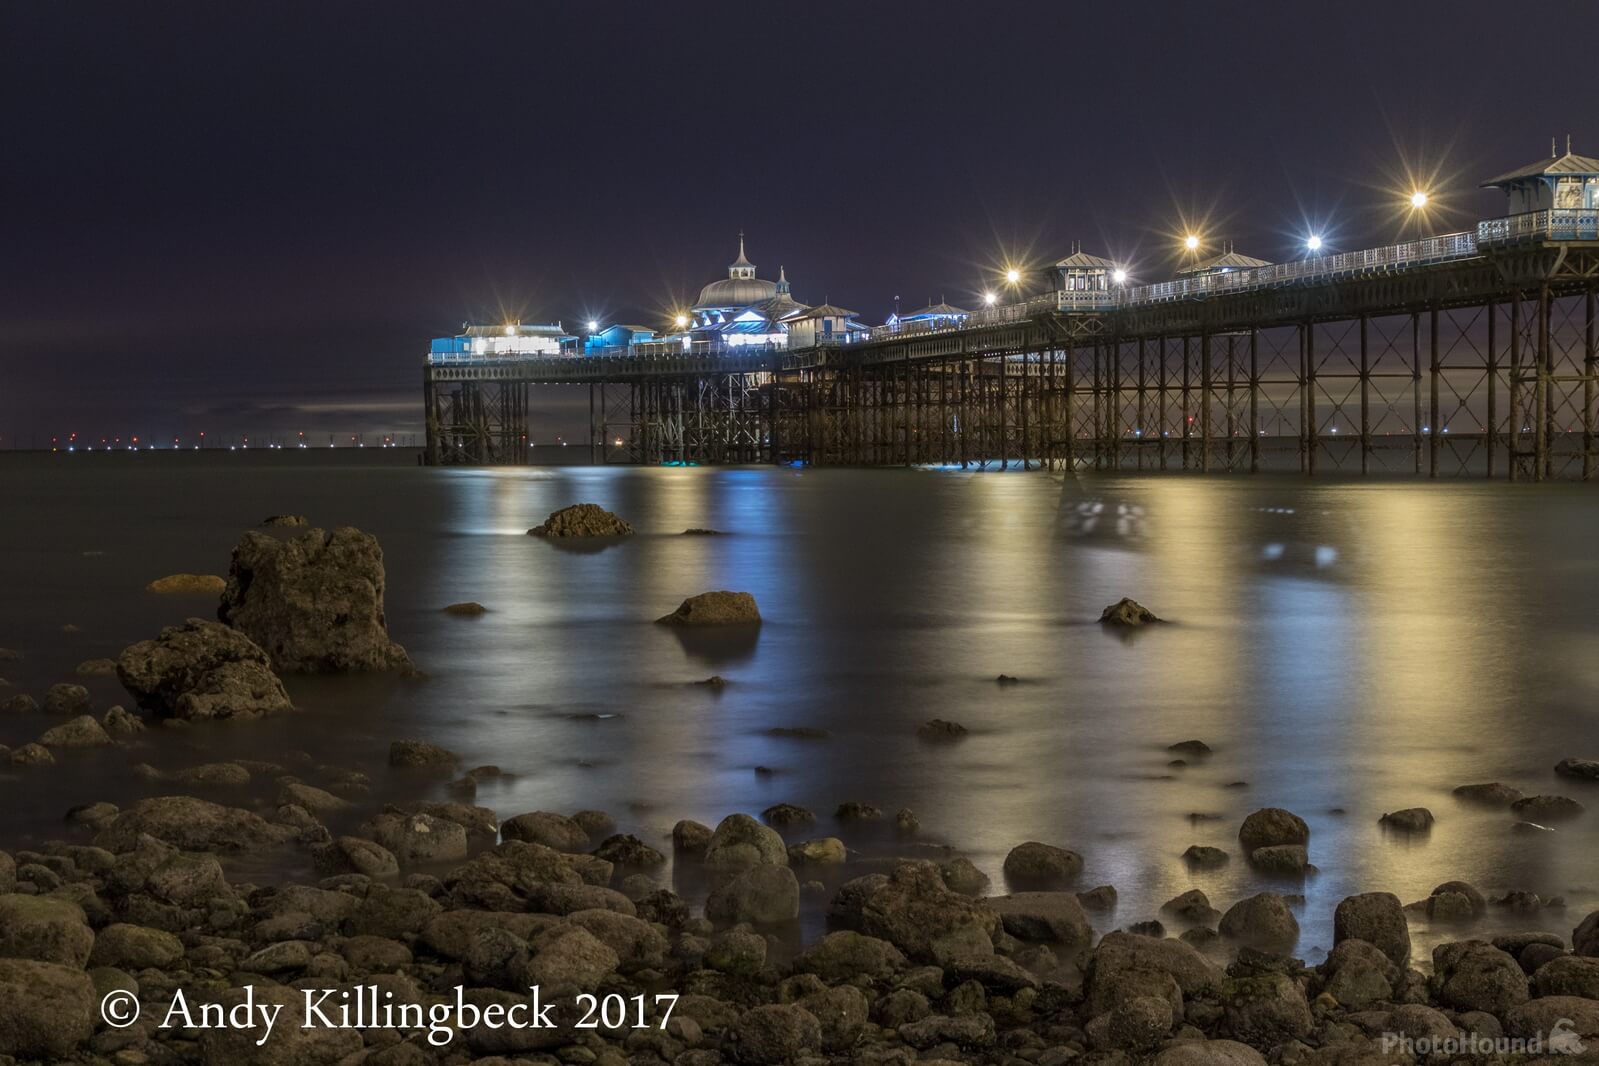 Image of Llandudno Pier by Andy Killingbeck